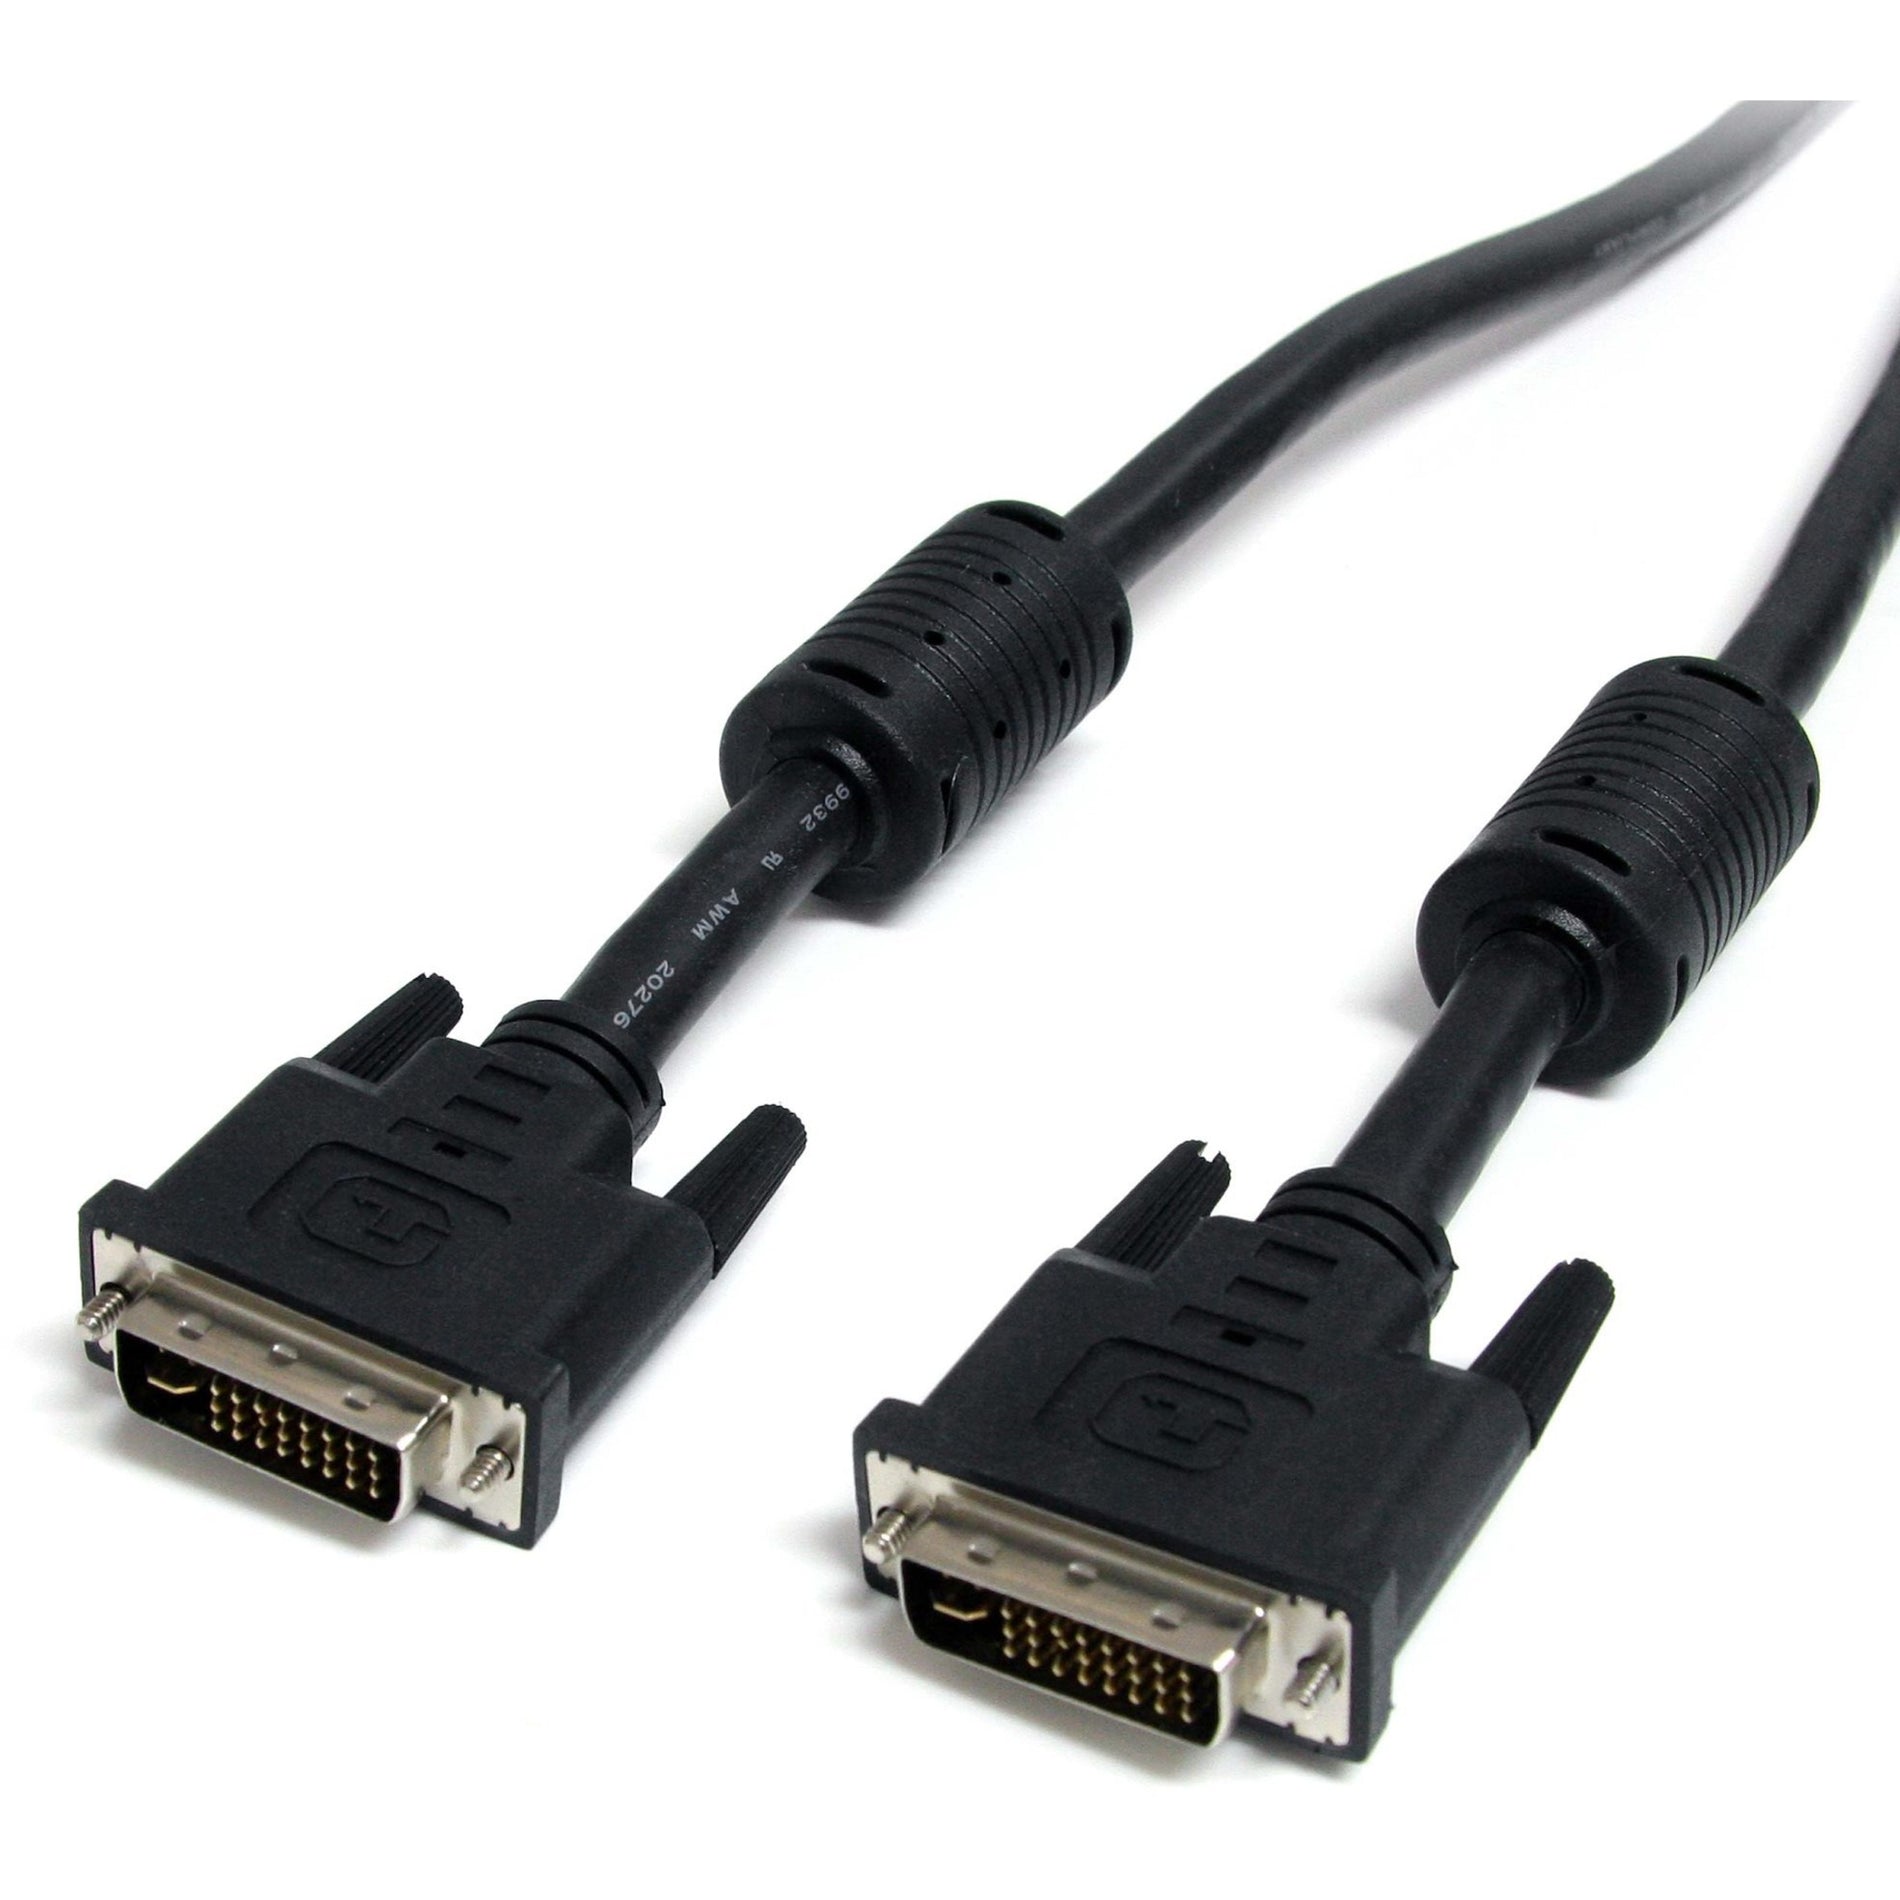 StarTech.com DVIIDMM15 Dual Link Digital Analog Flat Panel Cable, 15 ft, High Speed Transmission